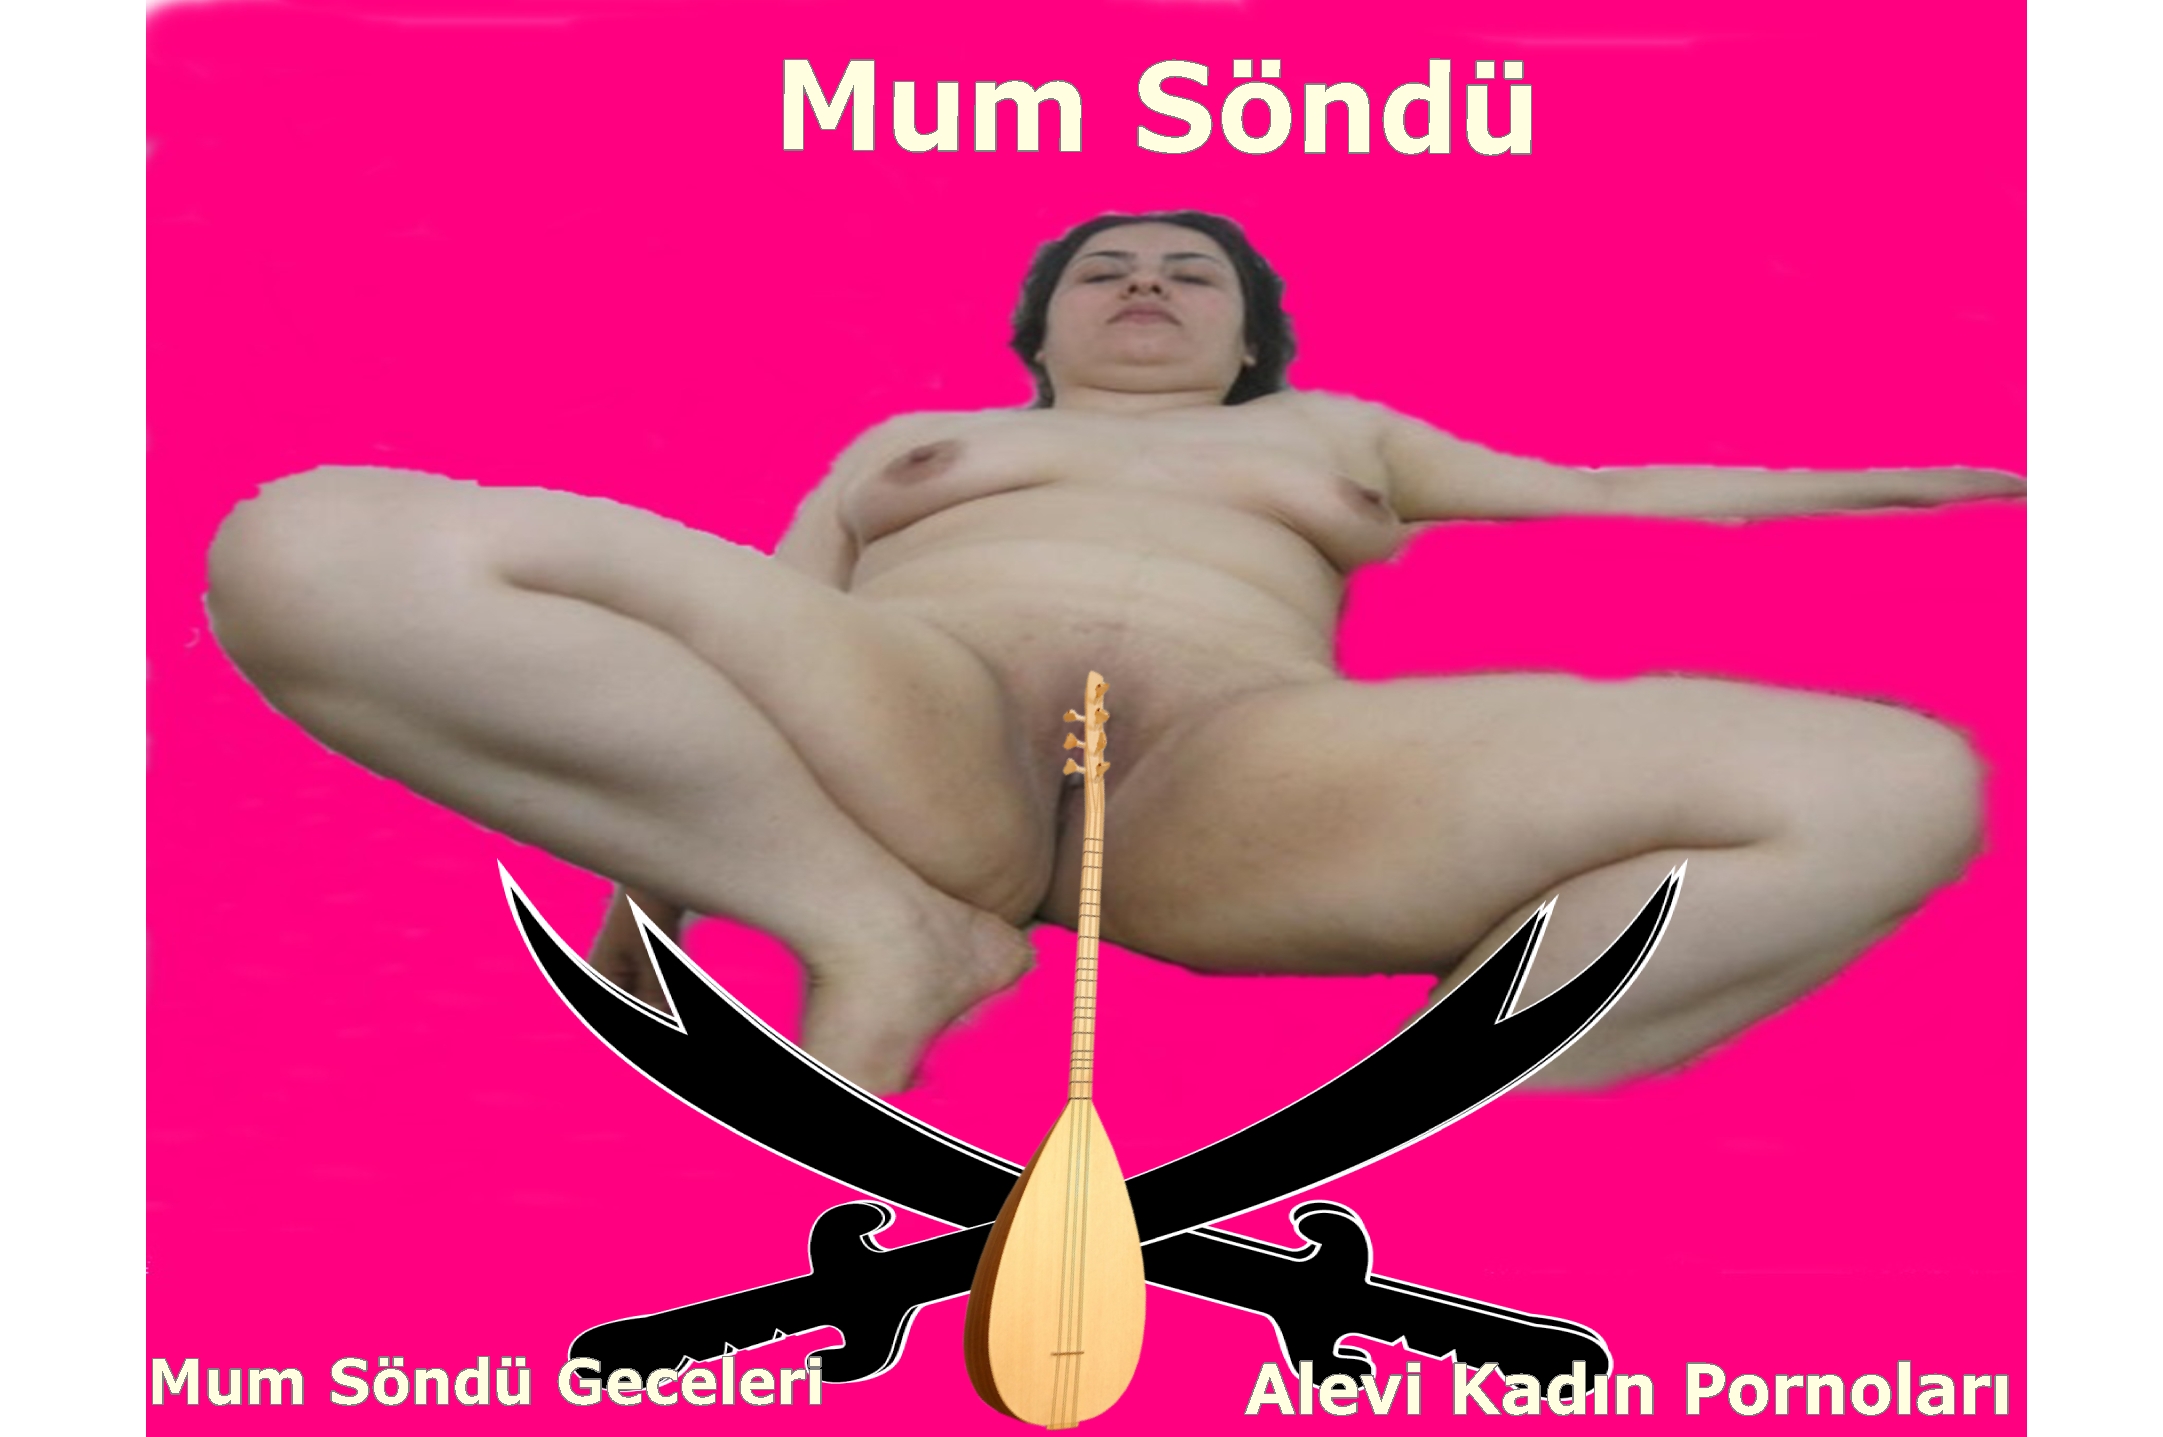 turkish alevi kadin porno sex pictures, free gallery